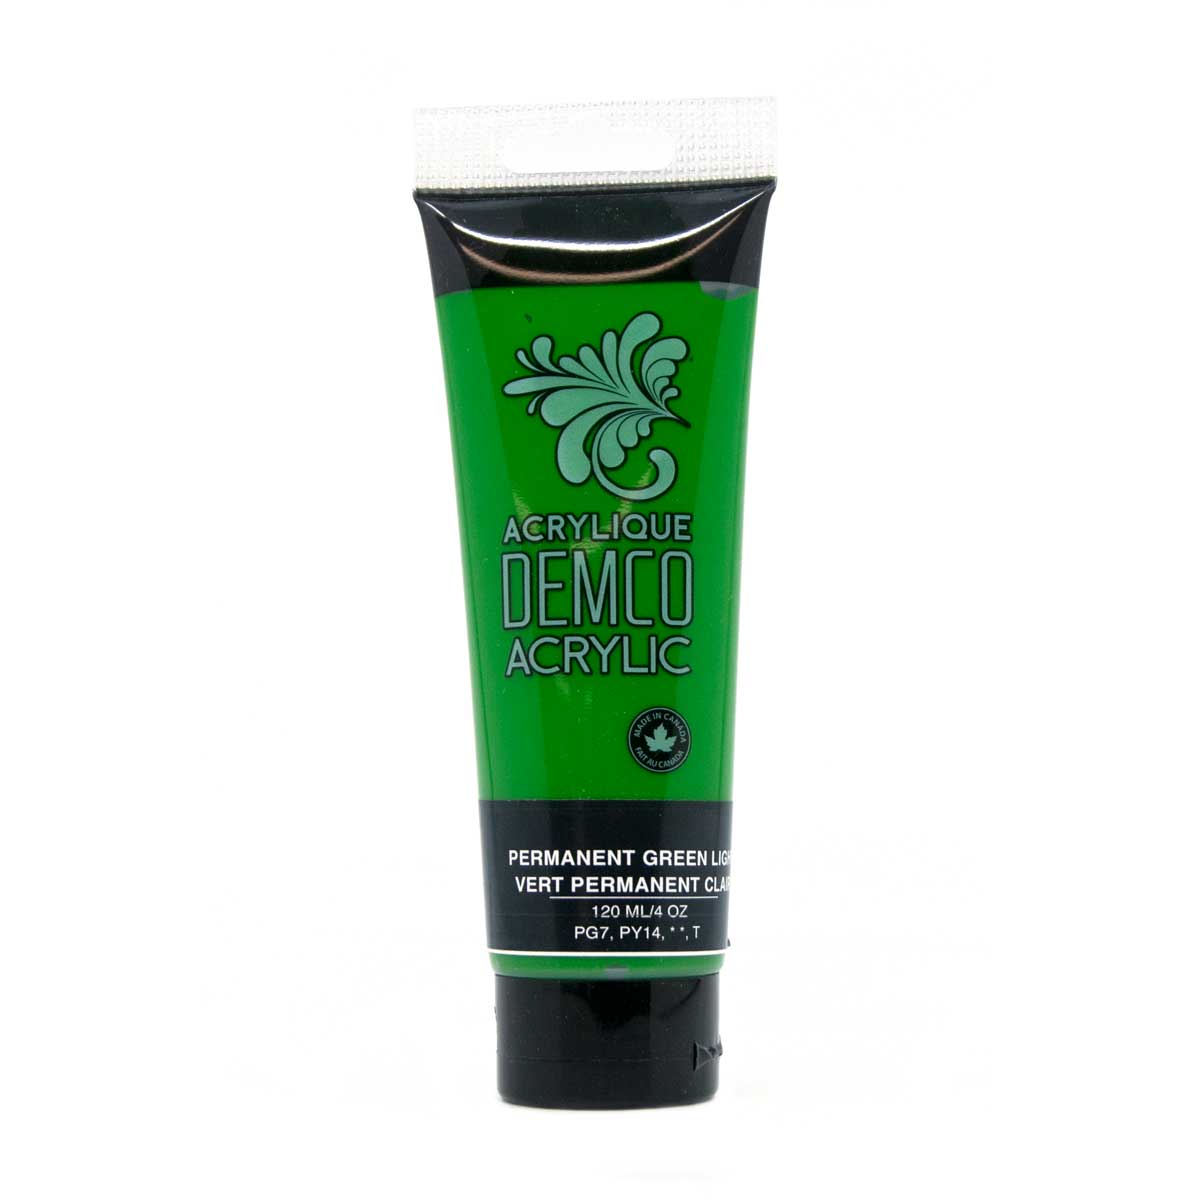 Demco Acrylic Permanent Green Light Hue 120ml/4oz